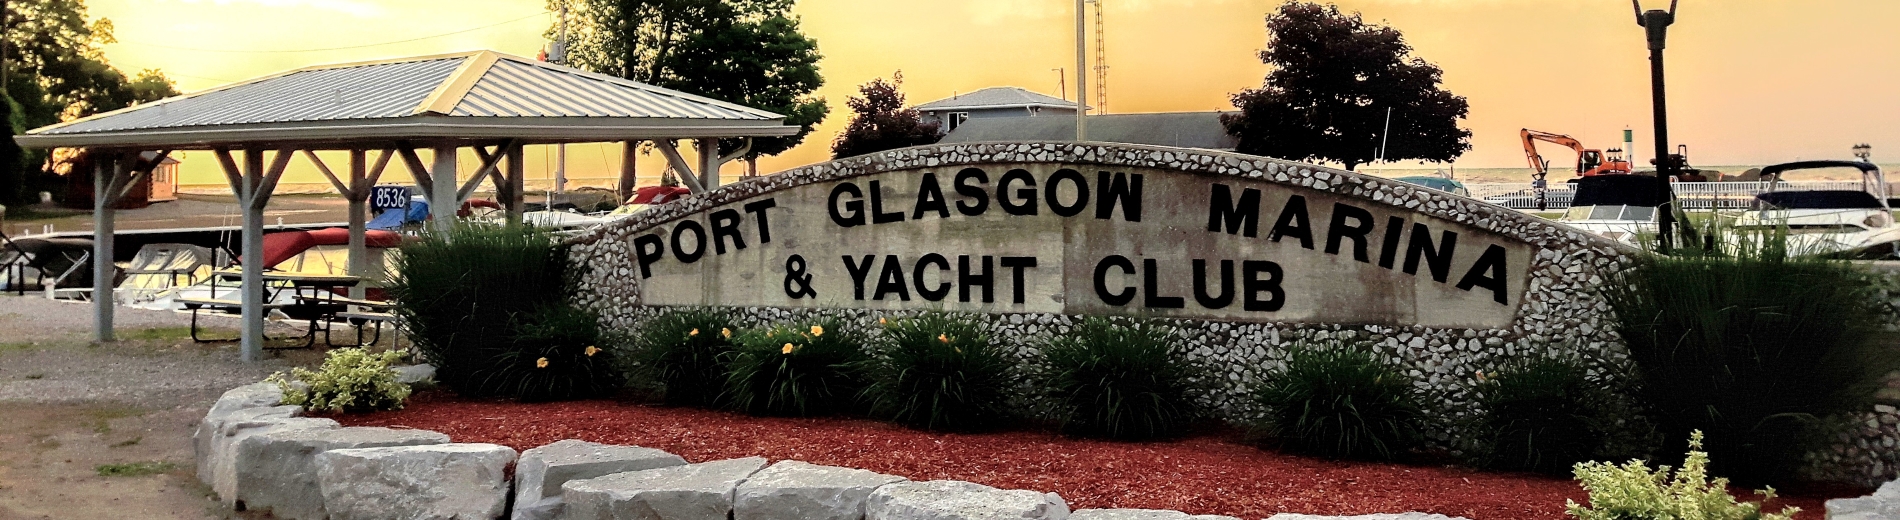 Port Glasgow Marina sign